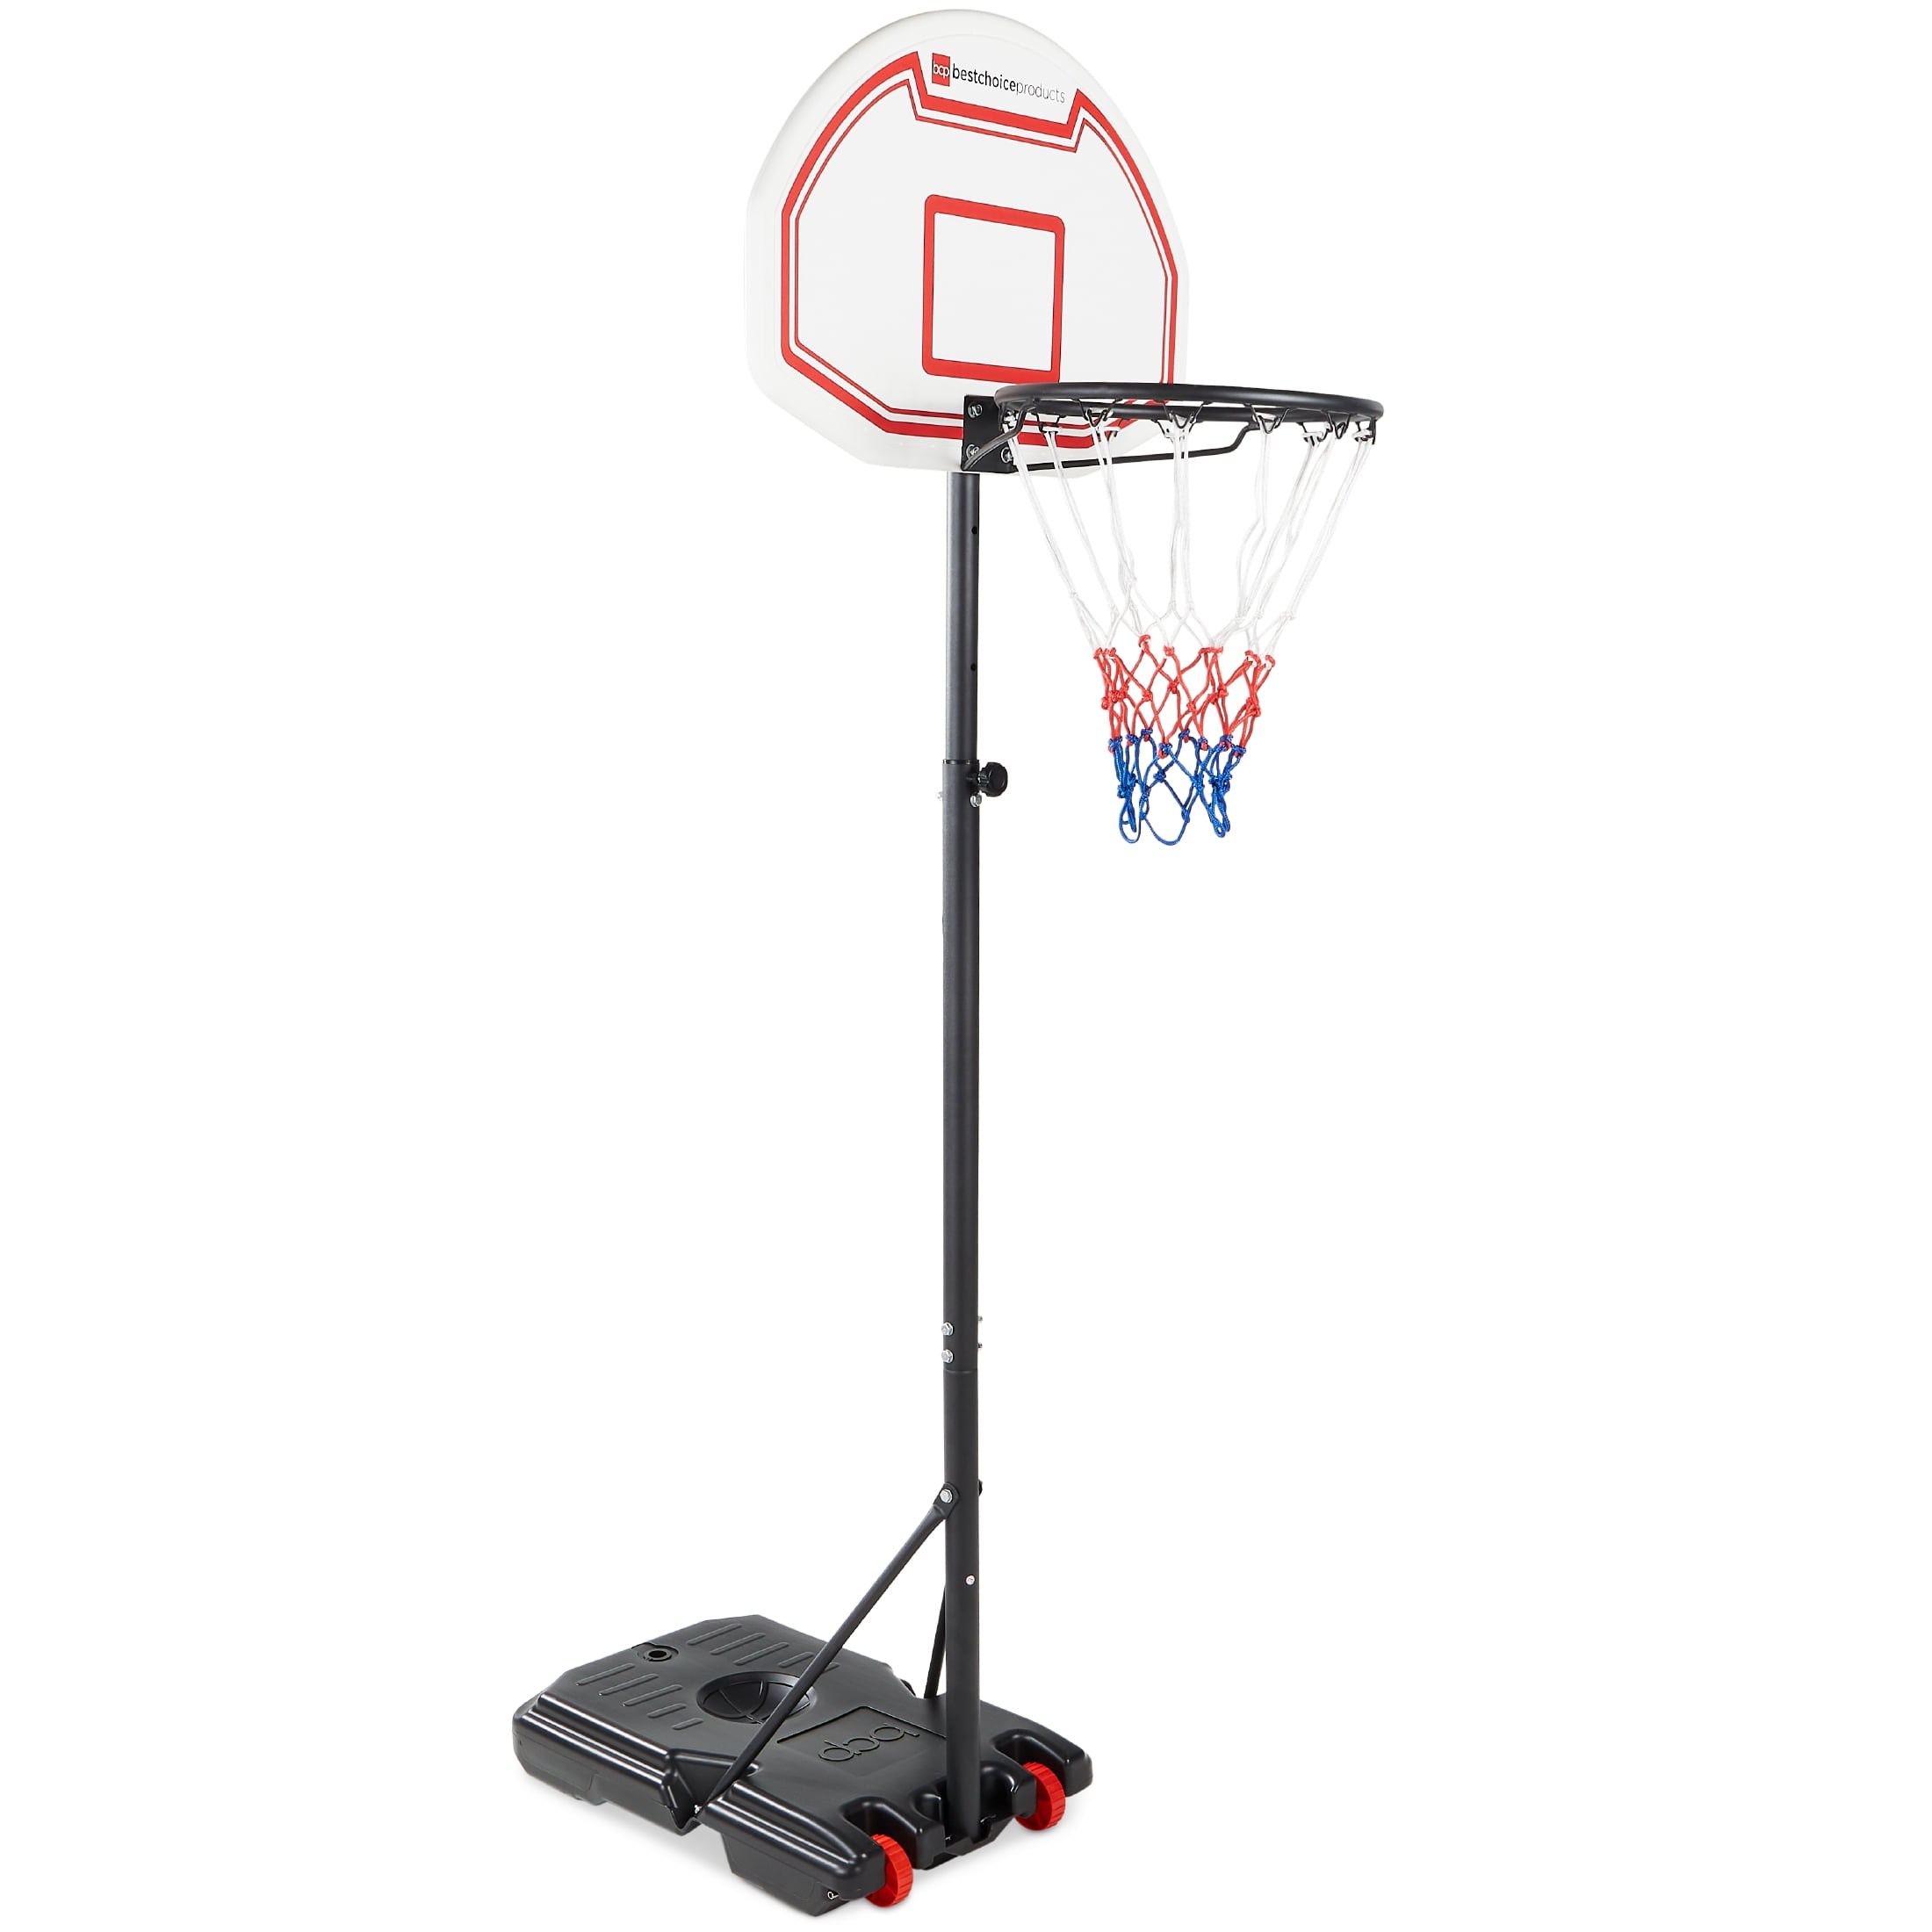 Adjustable Professional Basketball Stands Height Kids Hoop Set Educational 